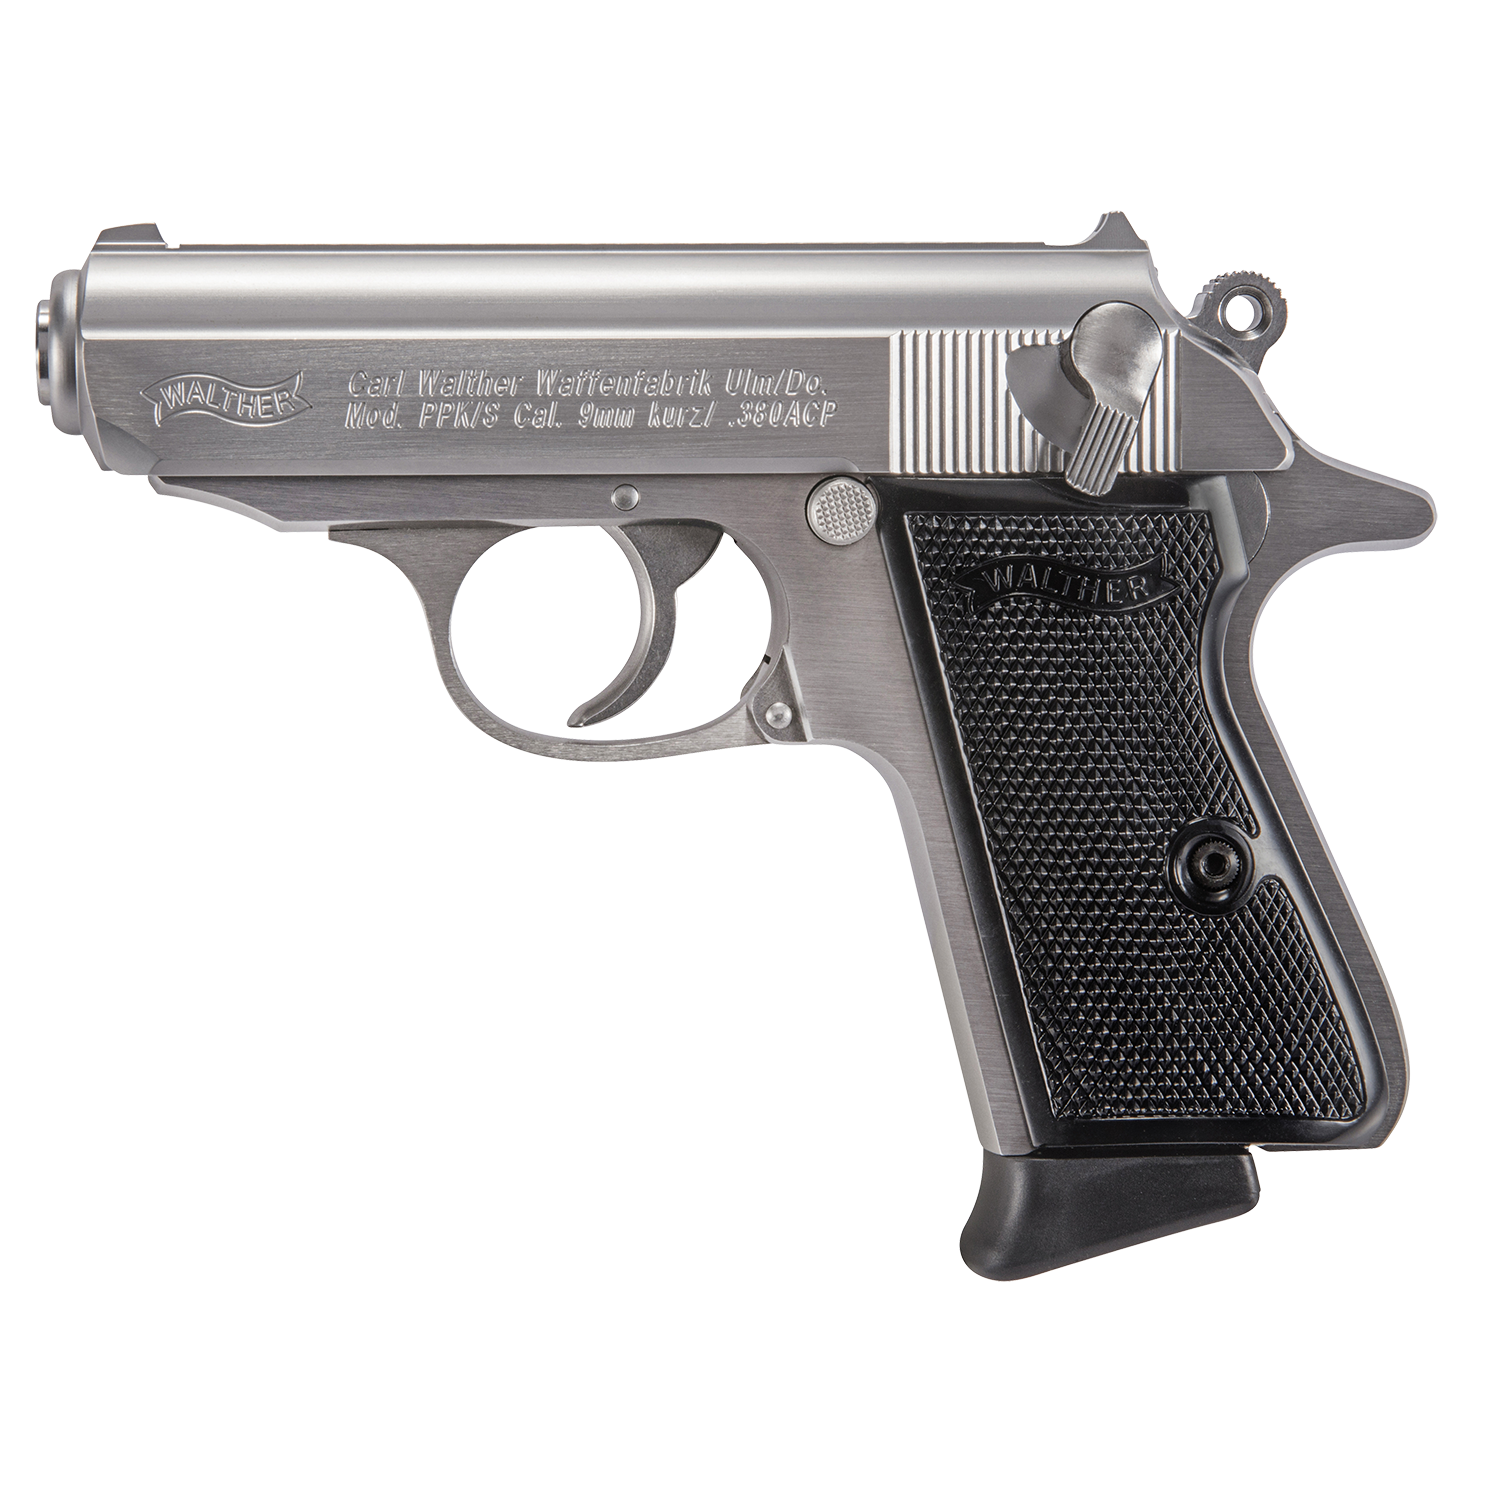 Walther PPK/S .380 ACP 7 Round Stainless Semi Auto Handgun